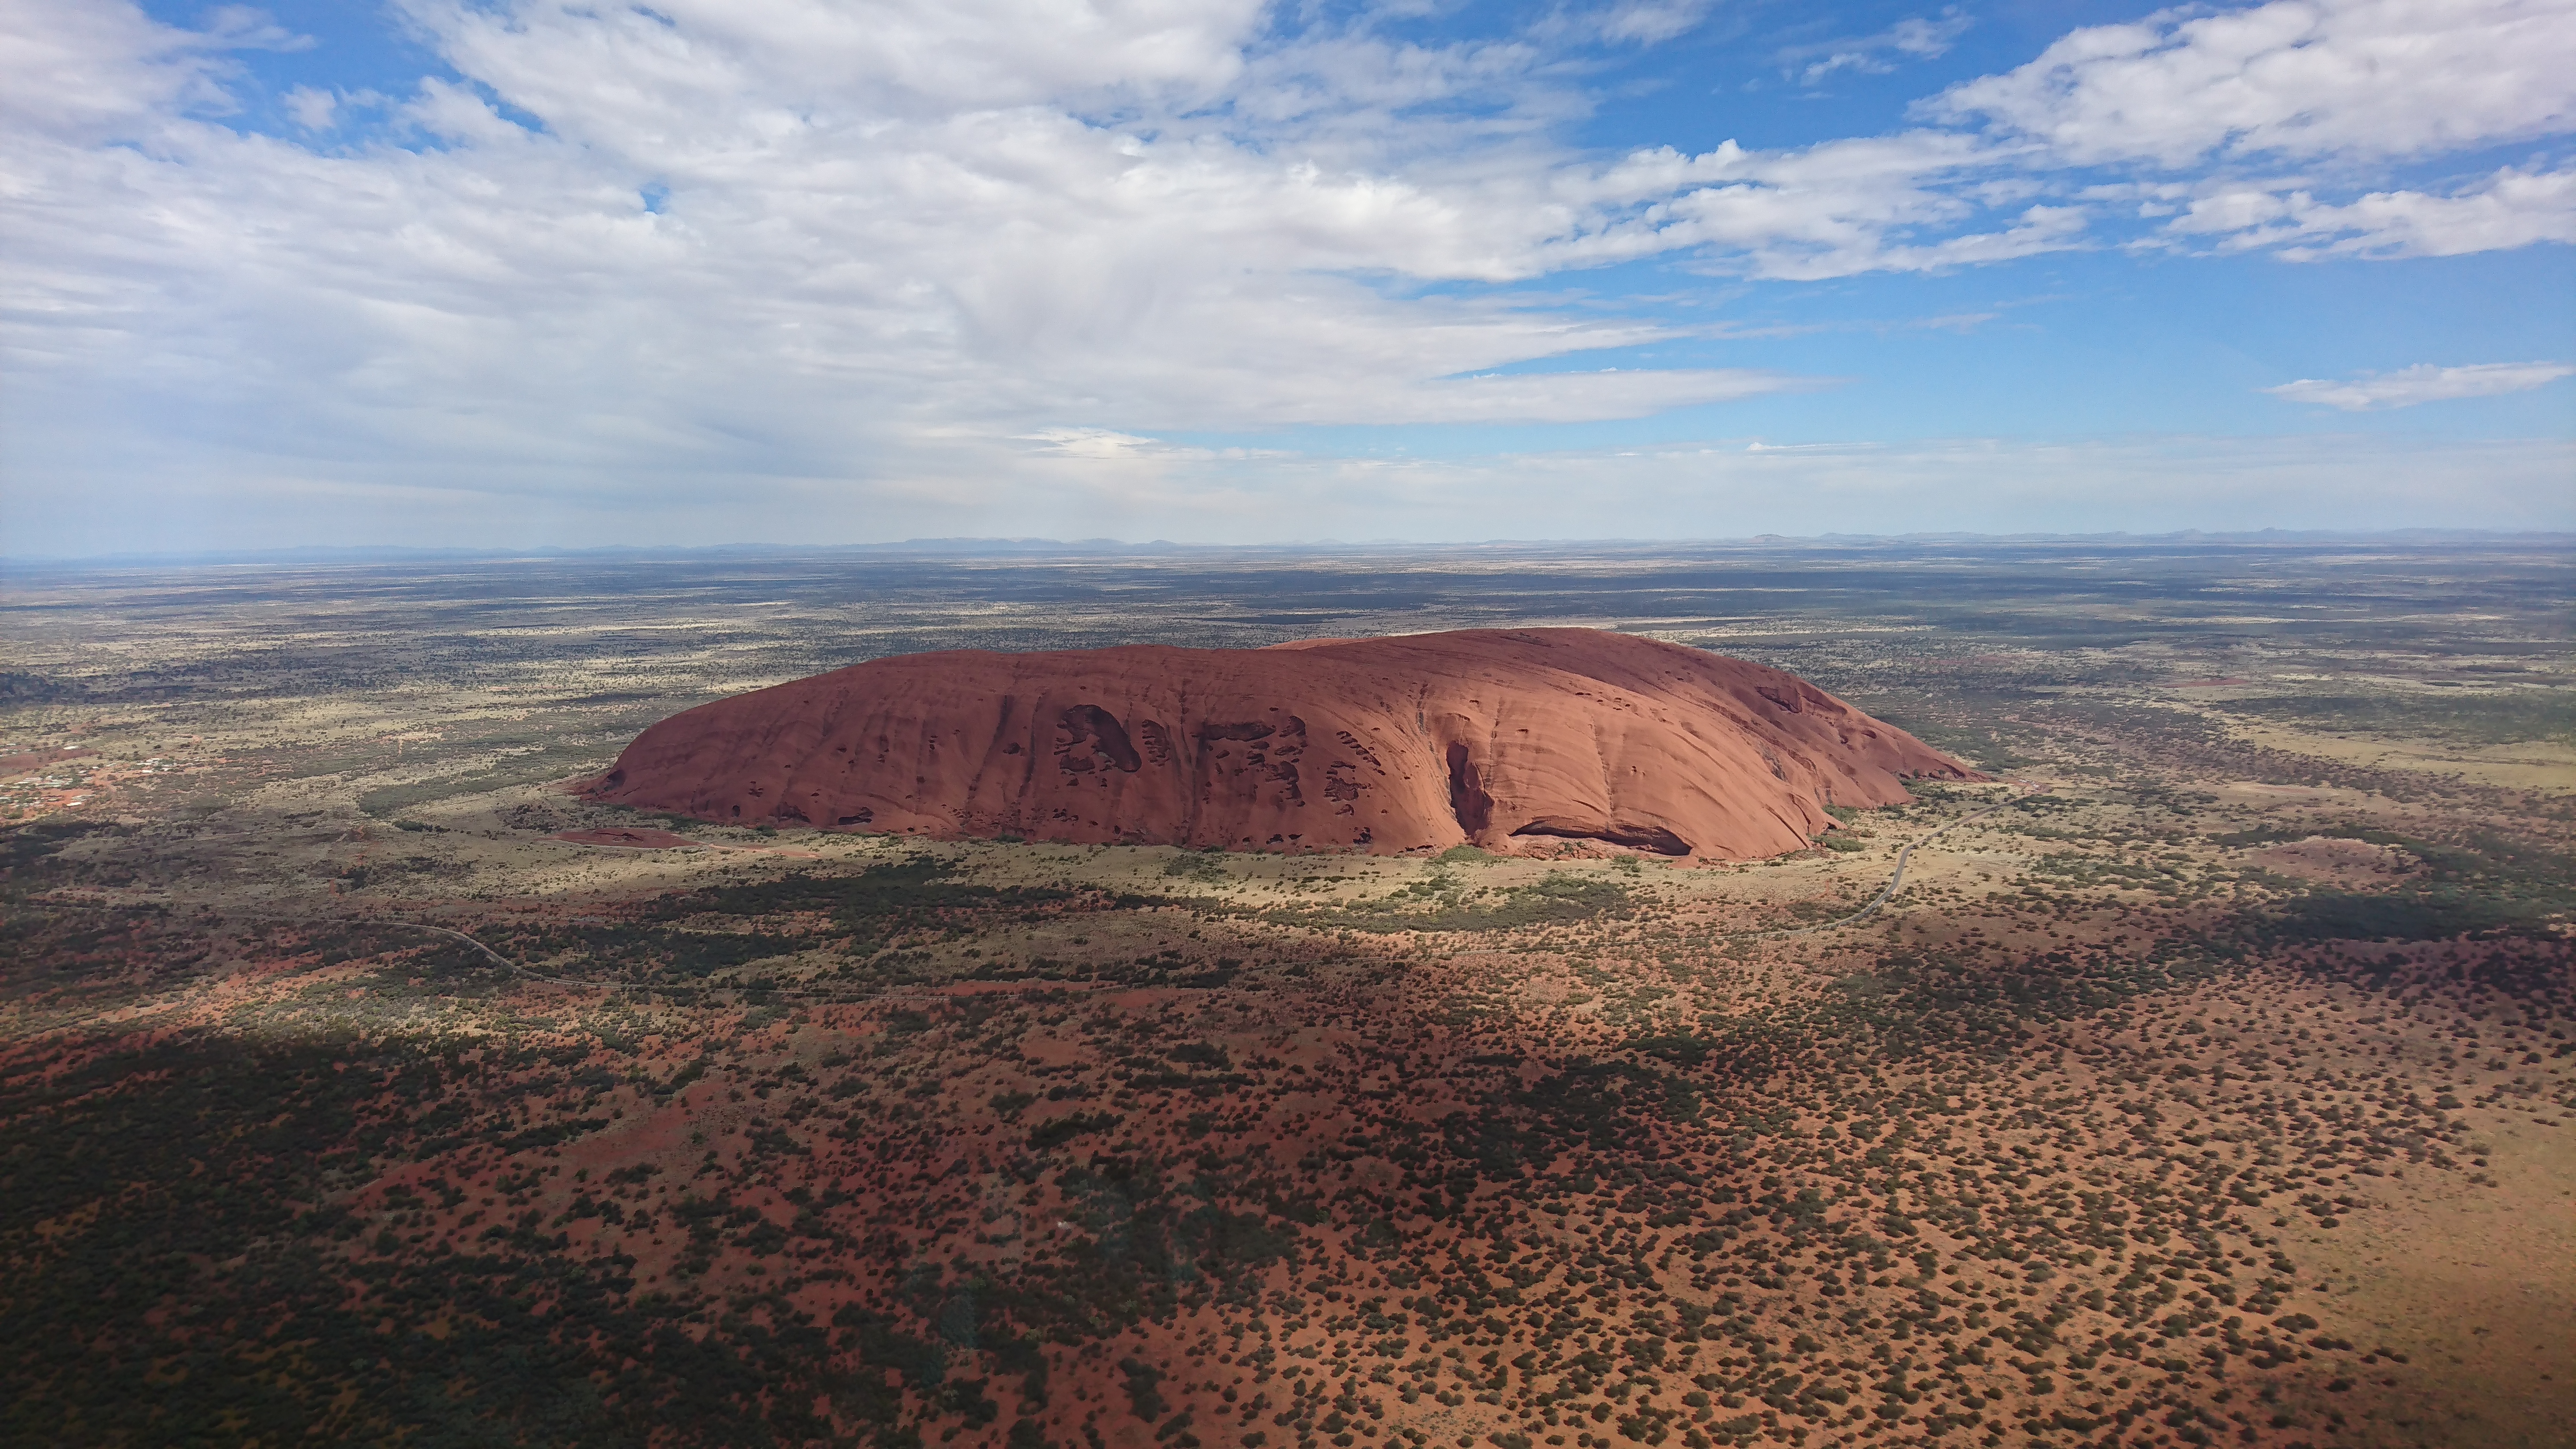 Ayers Rock - Uluru, Australia